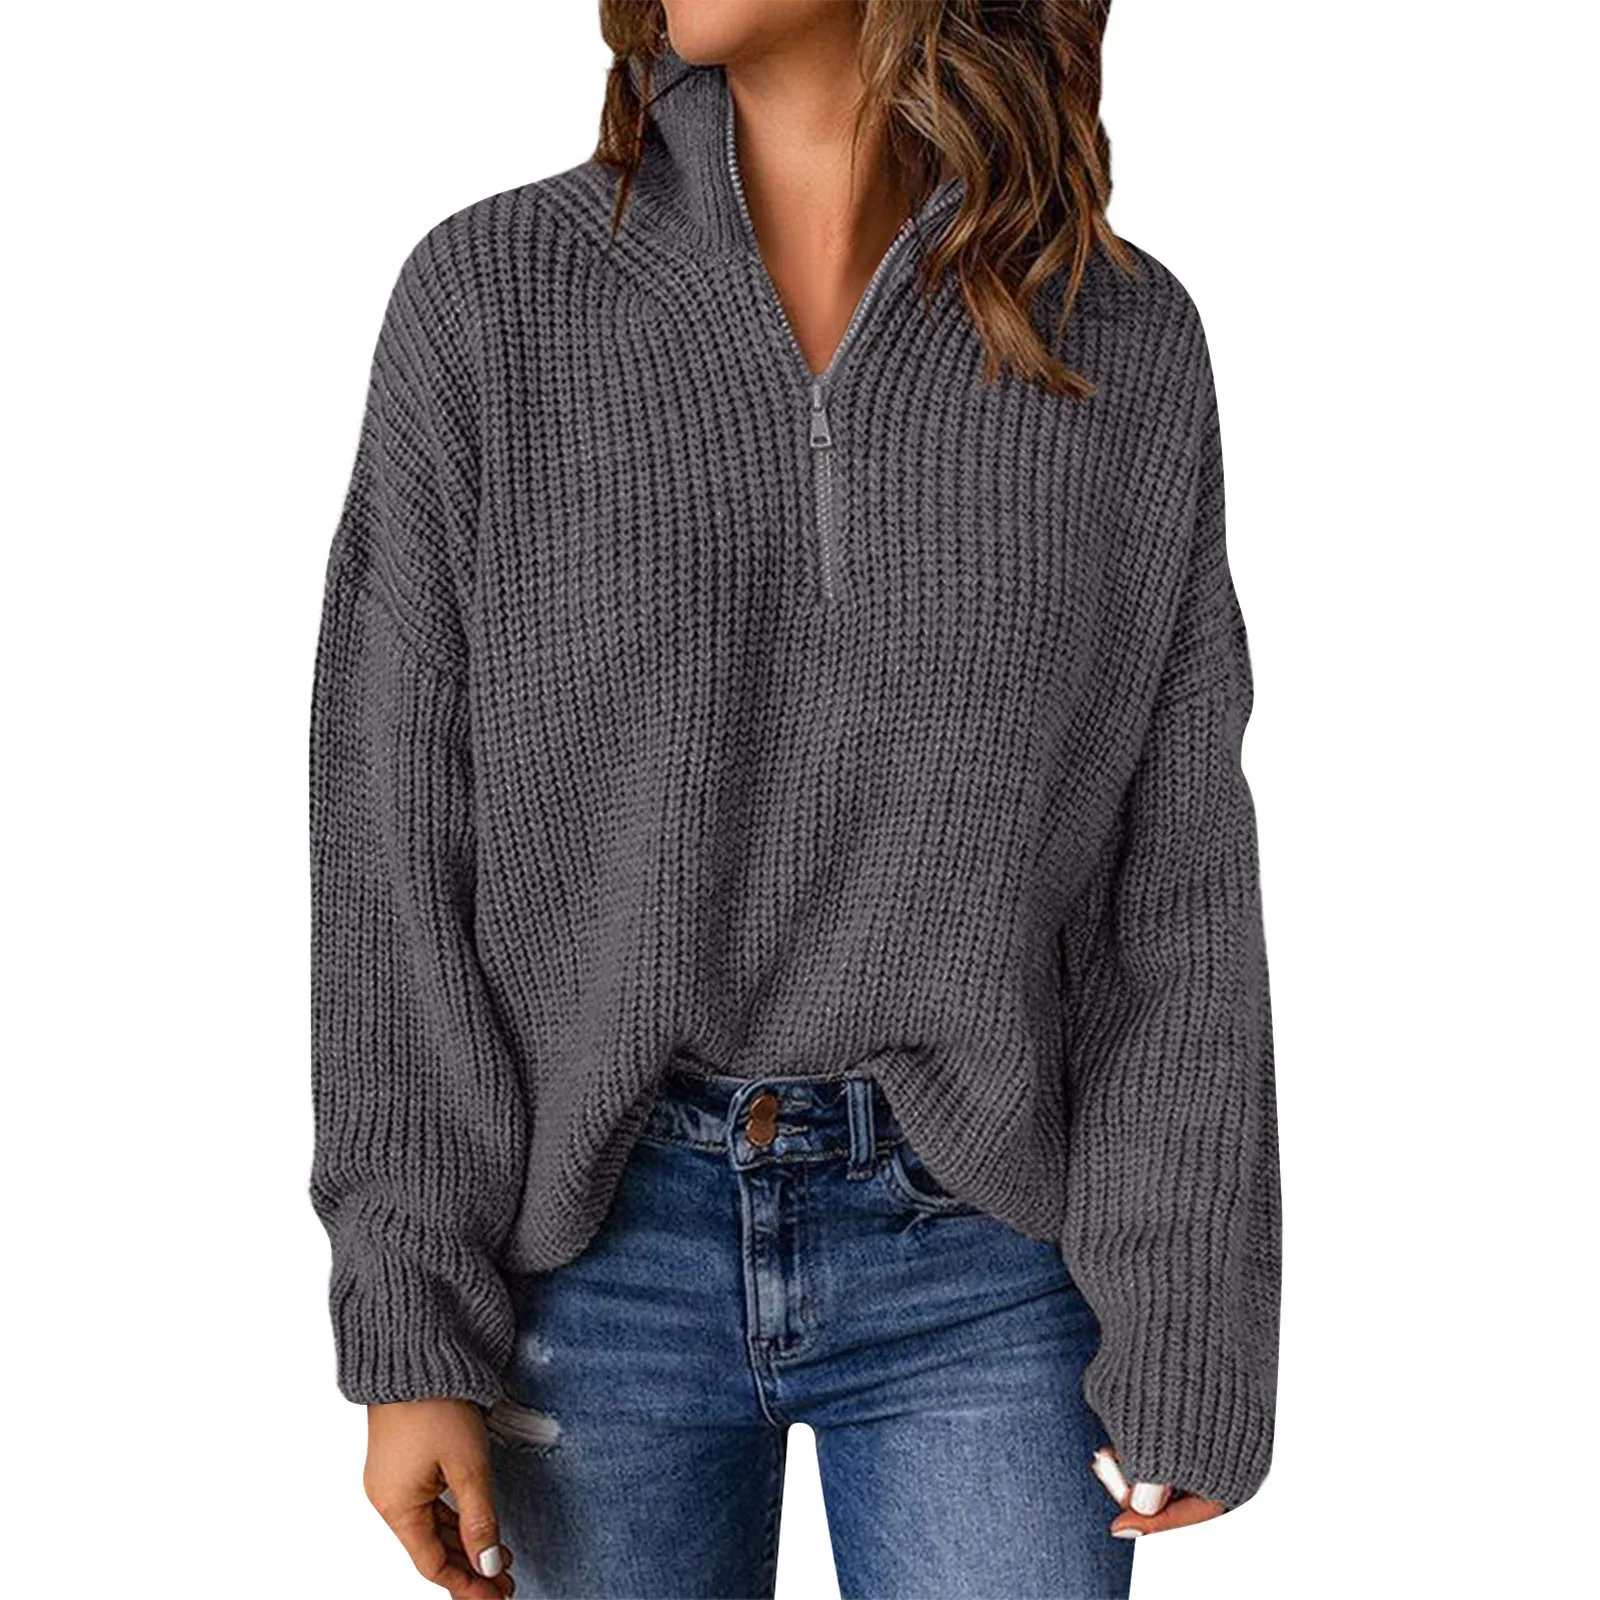 feminina, meio zip Pullovers, costela tricotar tops,